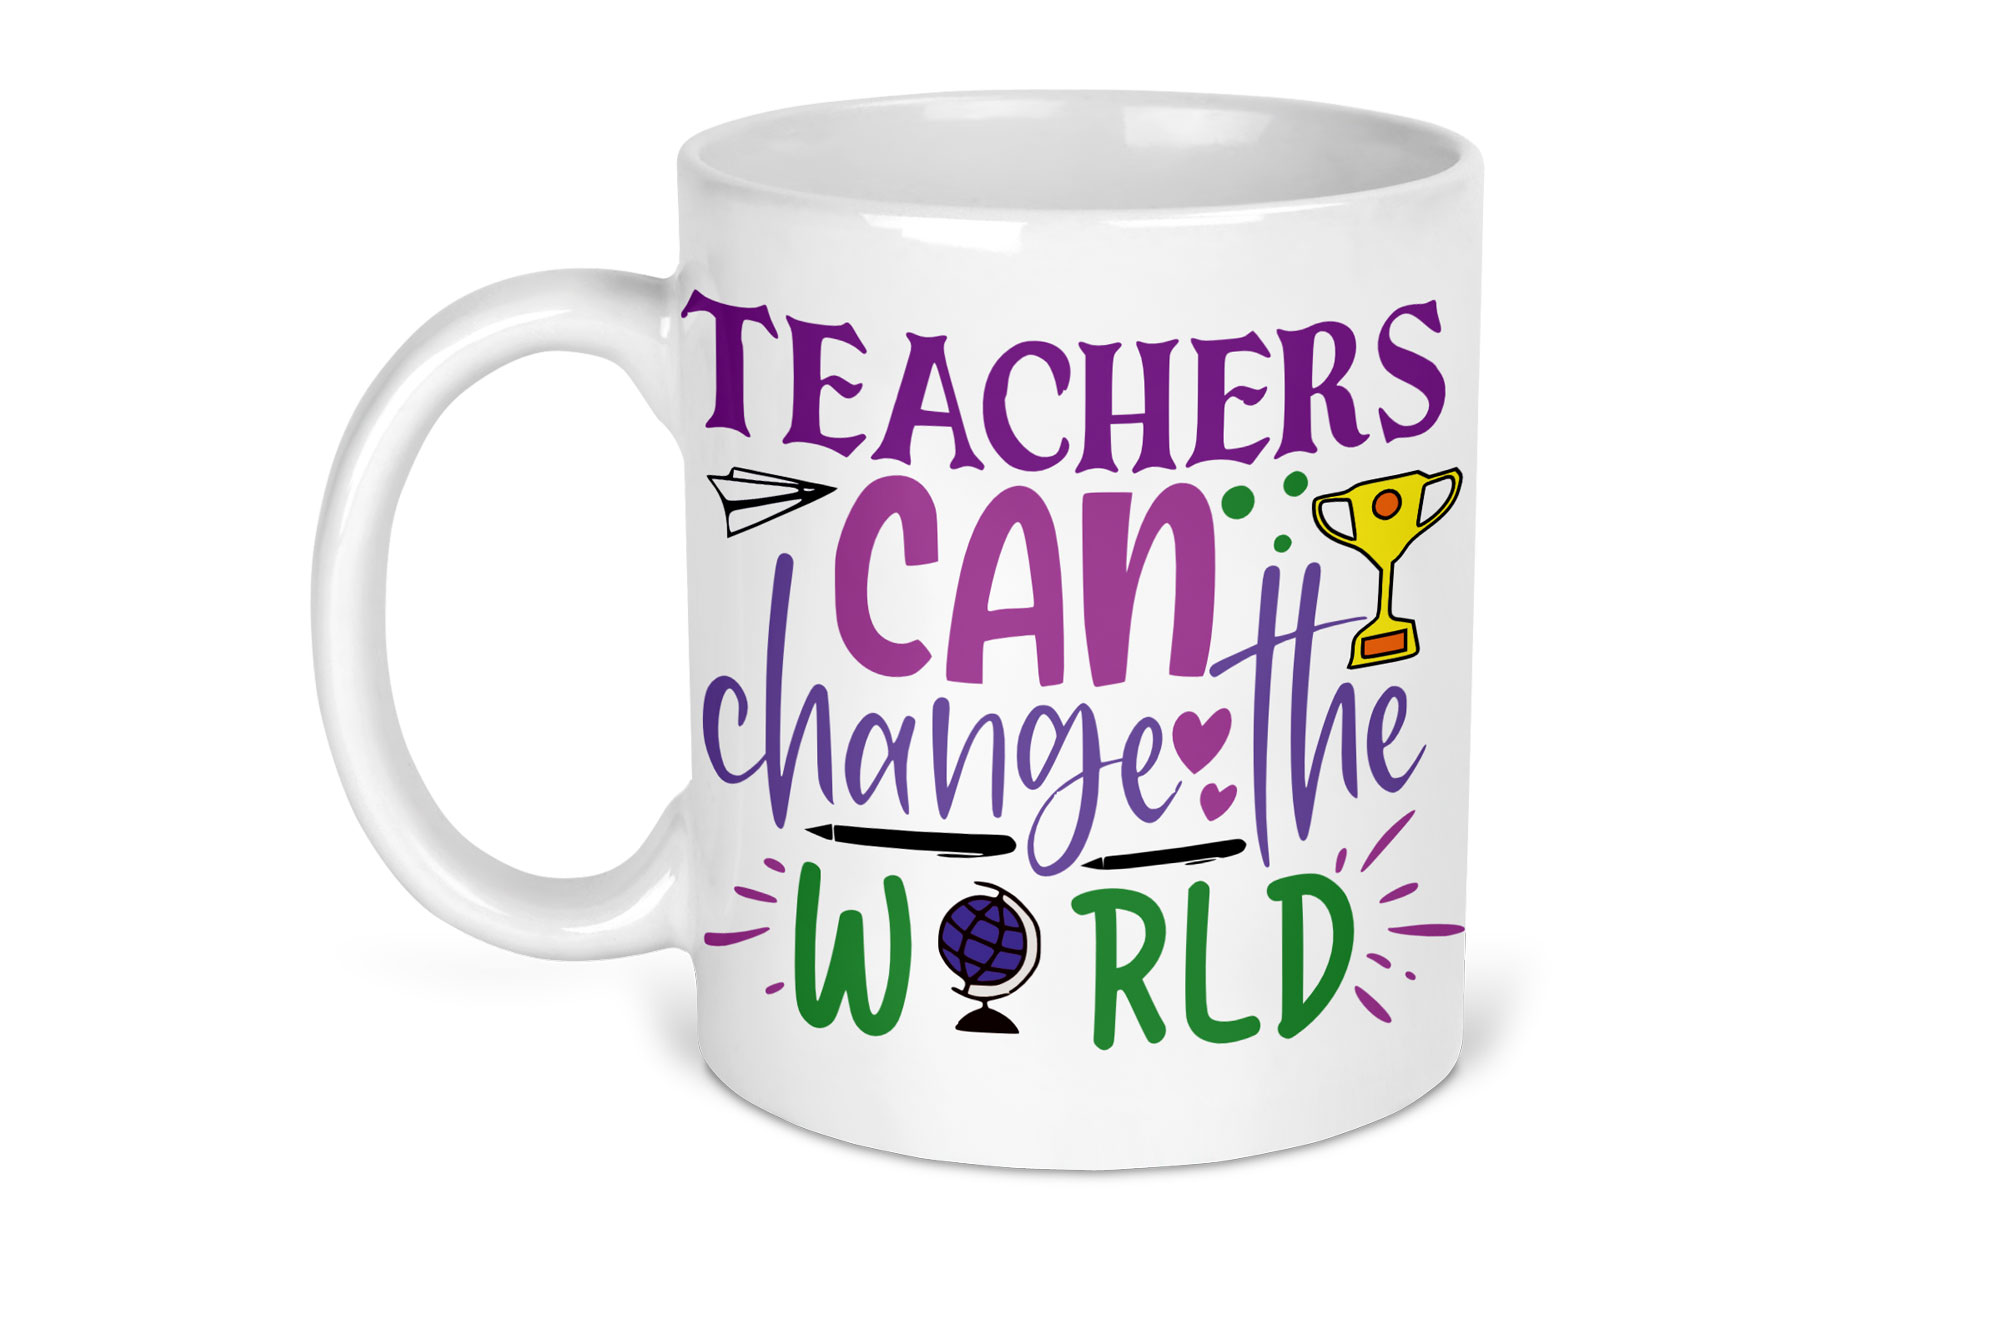 Teachers Change the World Mug Gift